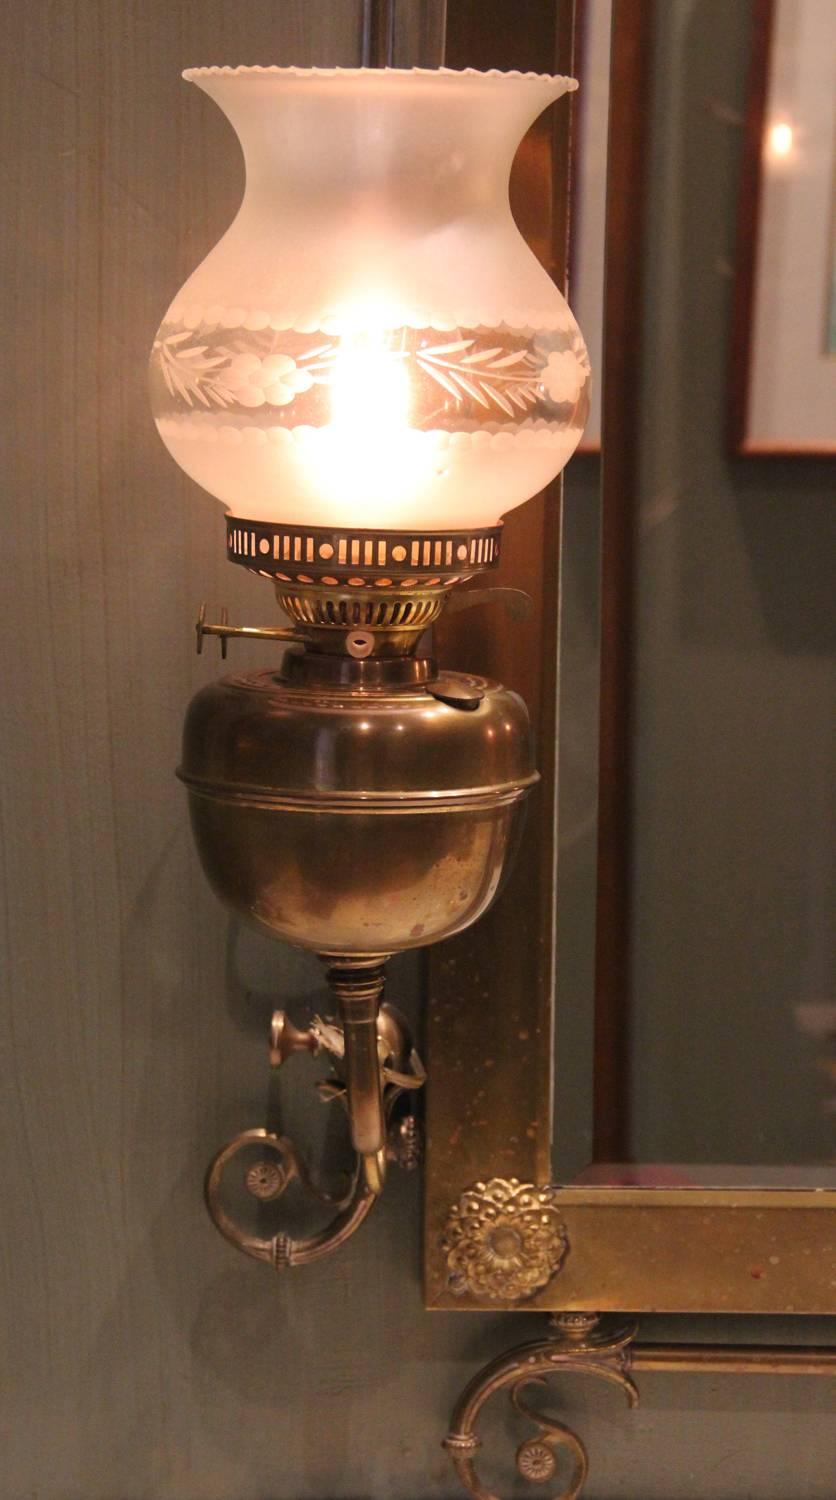 Brass Art Nouveau Period Wall Mirror with Kerosene Lamp Sconces, 19th Century Antique